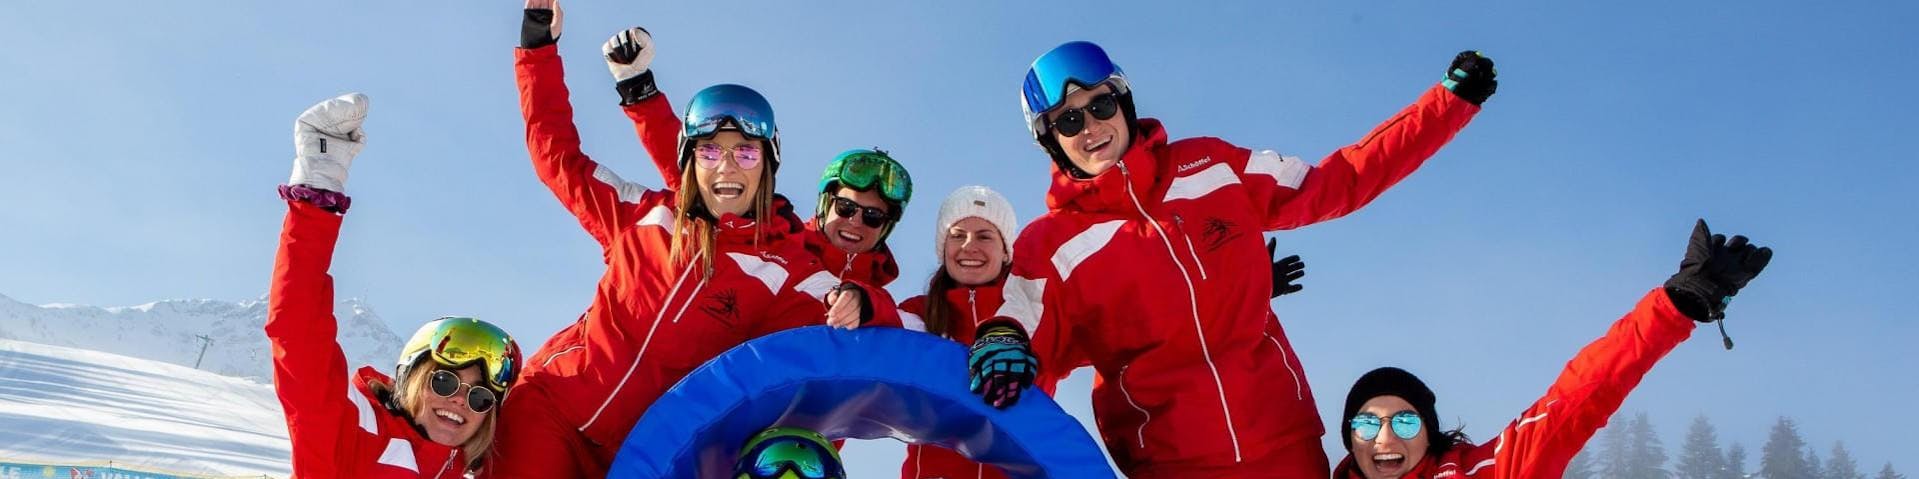 People having fun skiing and snowboarding with Schneesportschule Oberndorf.